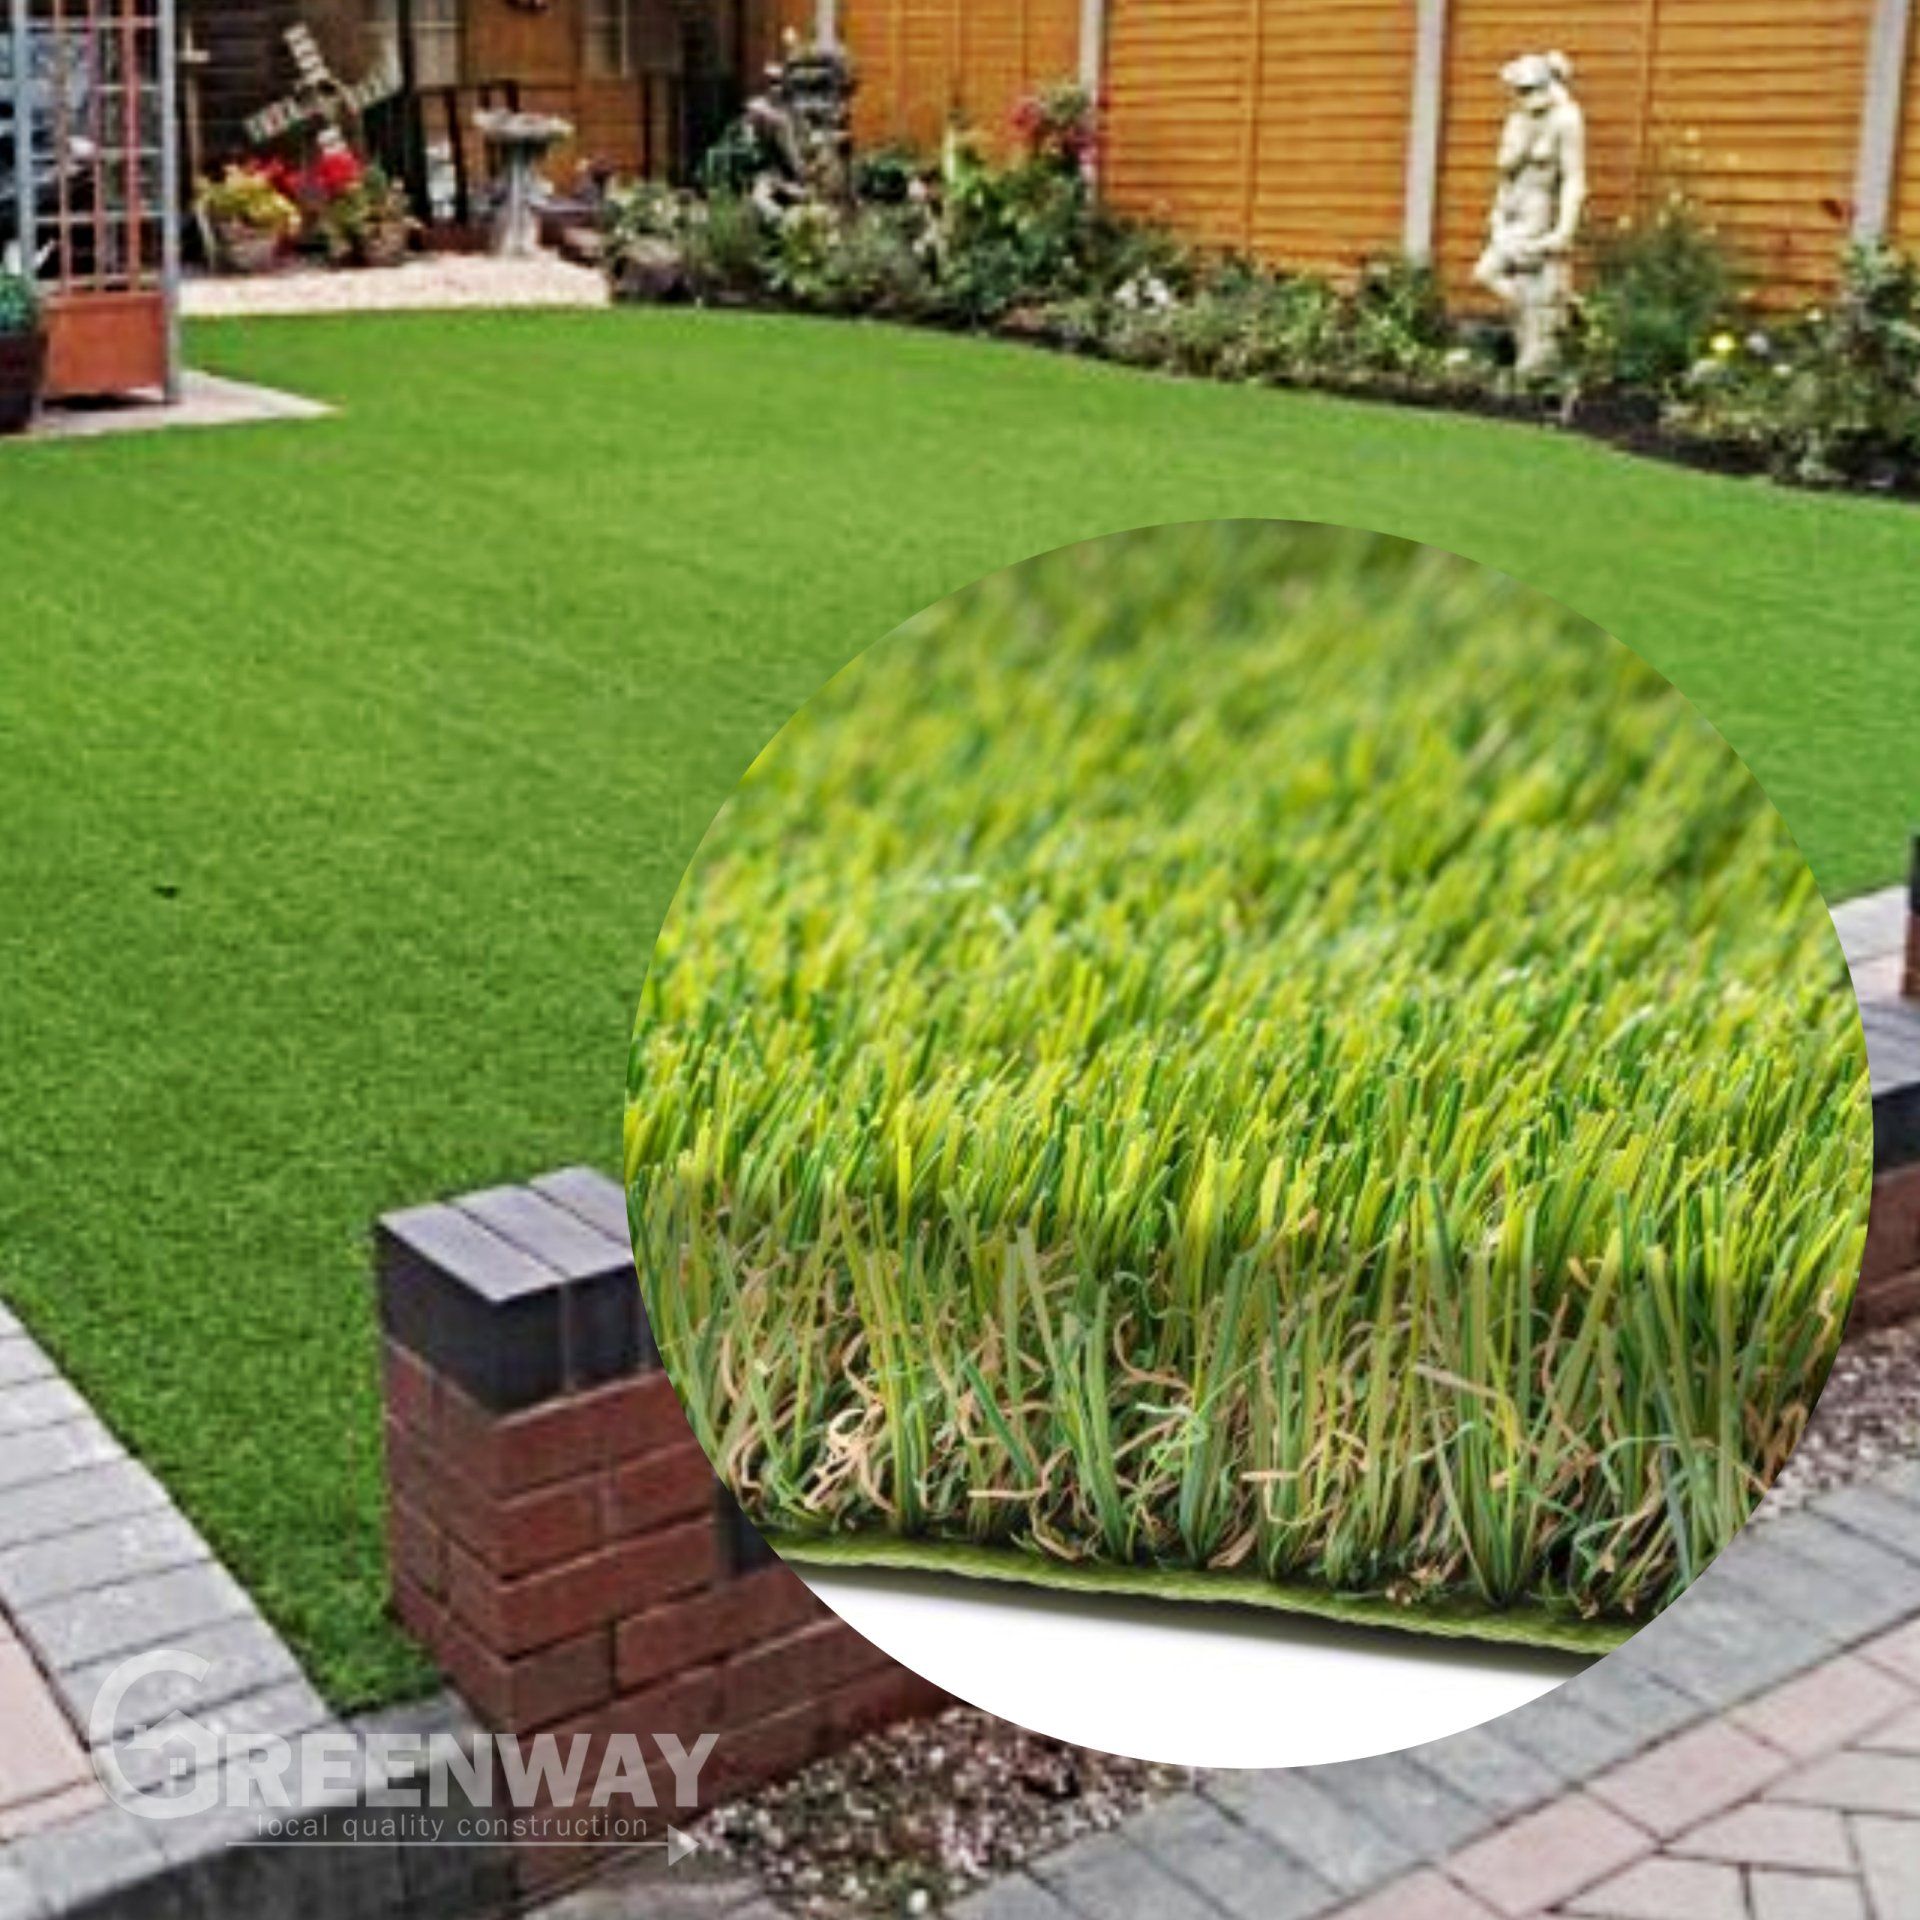 Greenway Artificial Eco-Grass